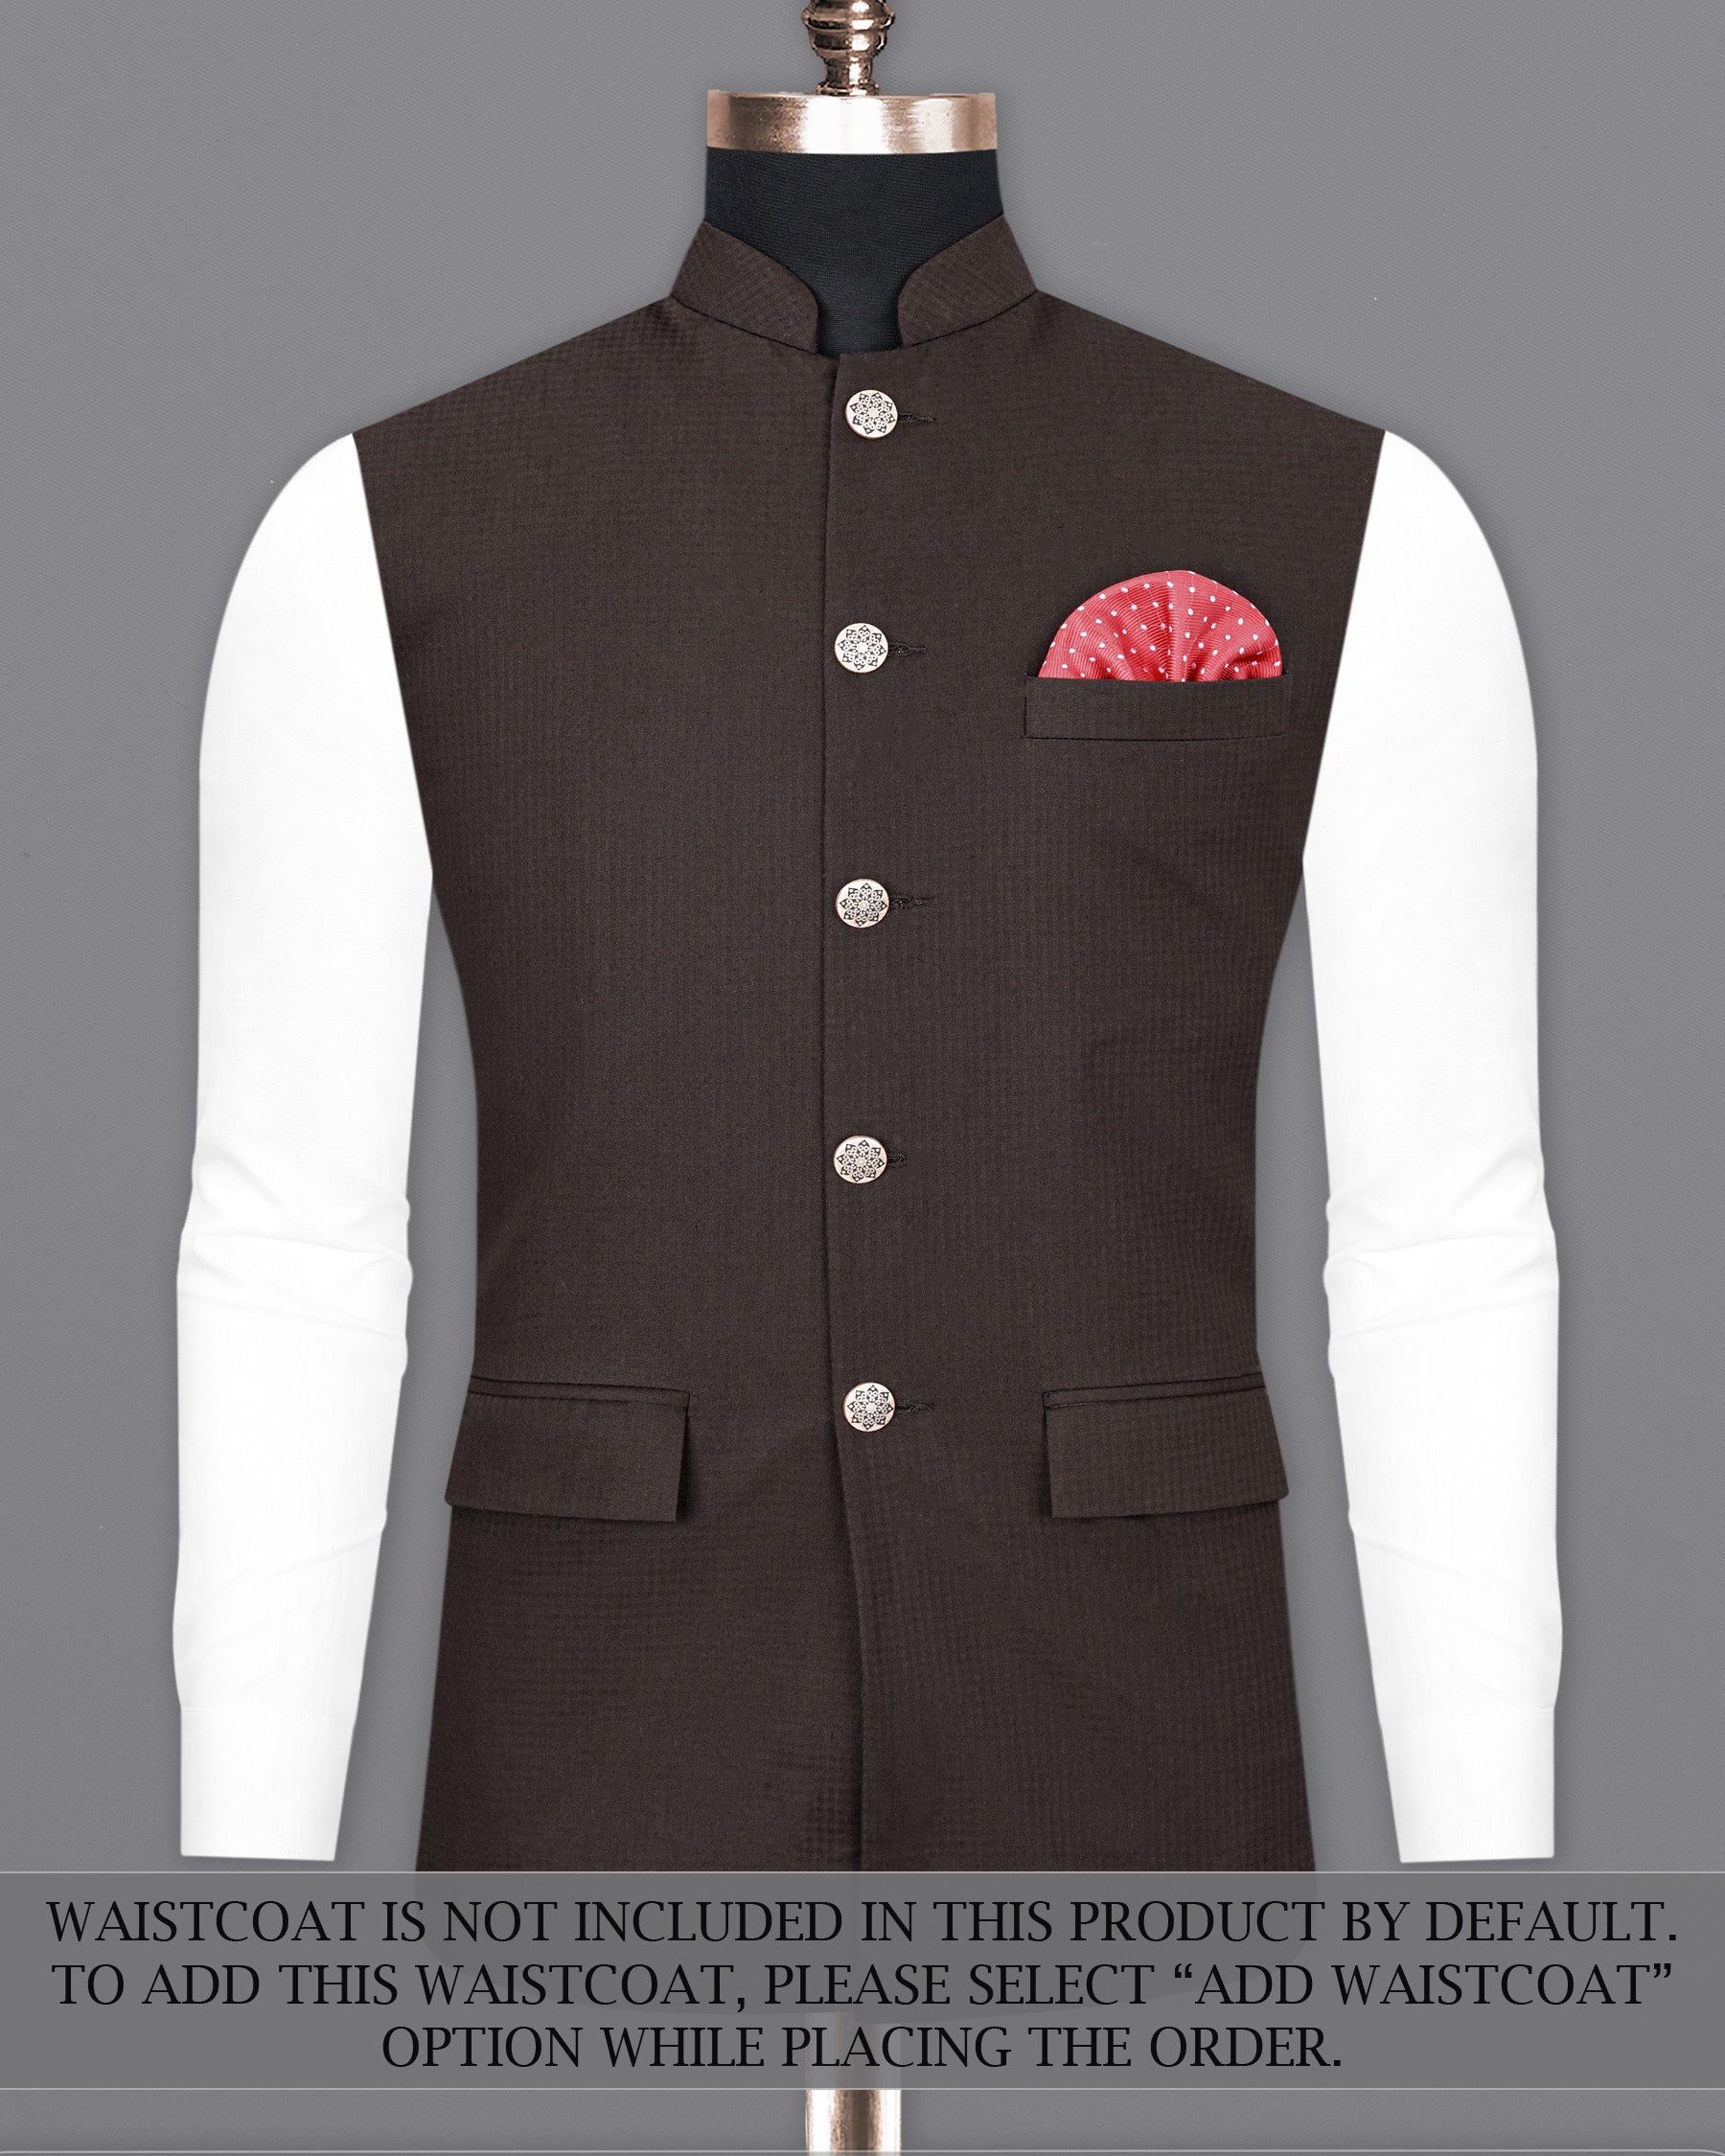 Birch Brown Bandhgala Sports Premium Cotton Suit